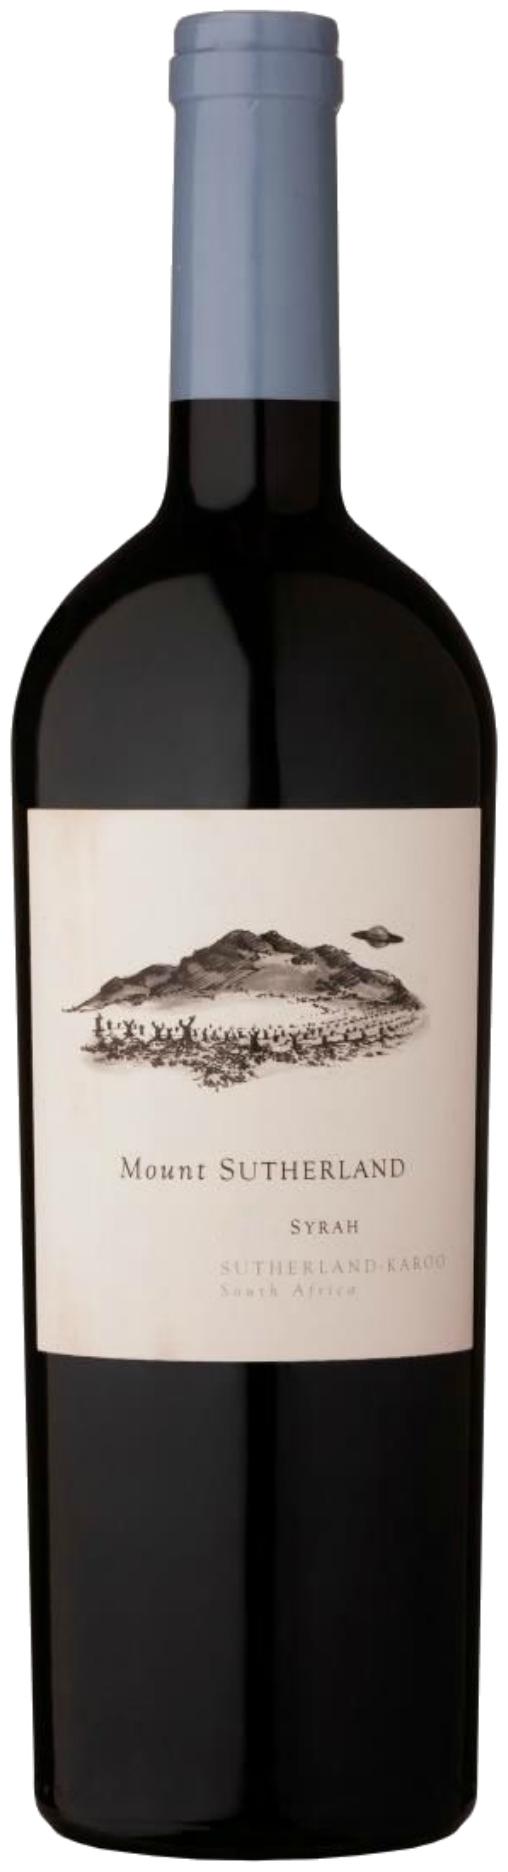 Mount Sutherland Syrah 2018